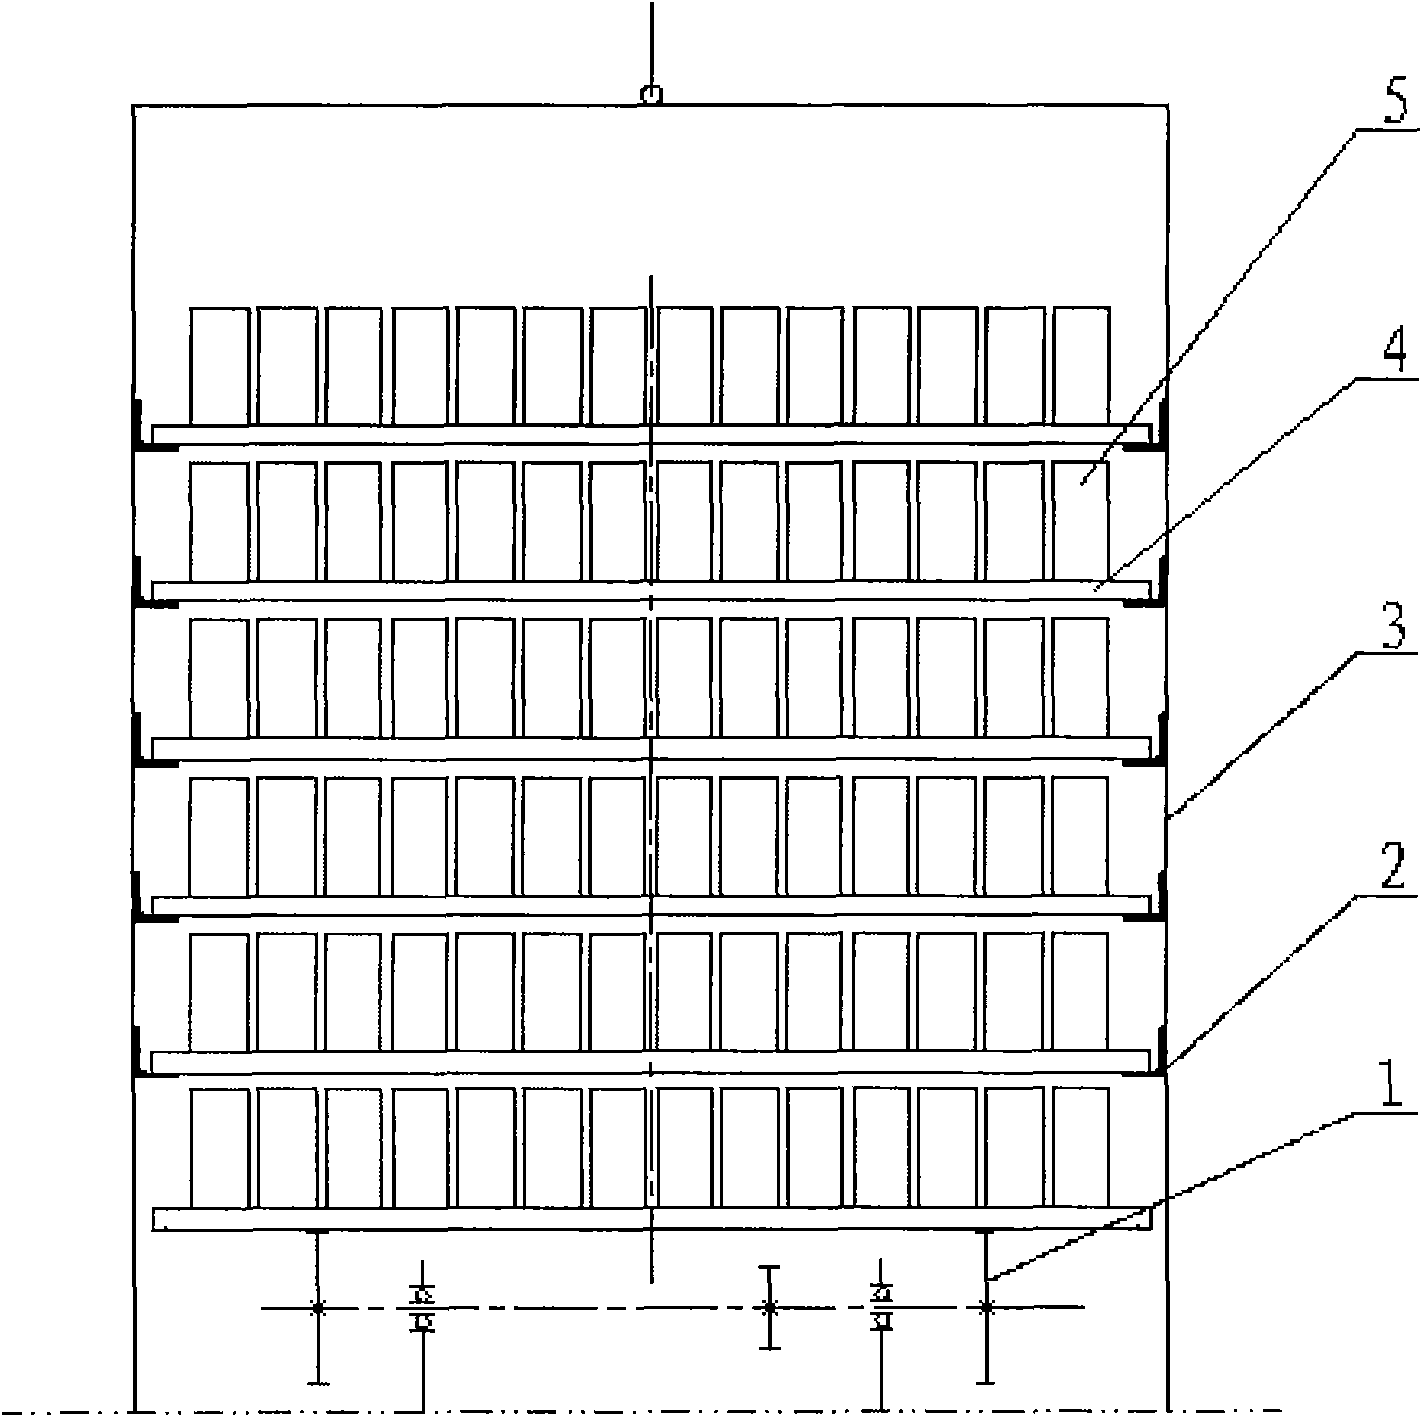 Automatic production process for post production flow of concrete blocks